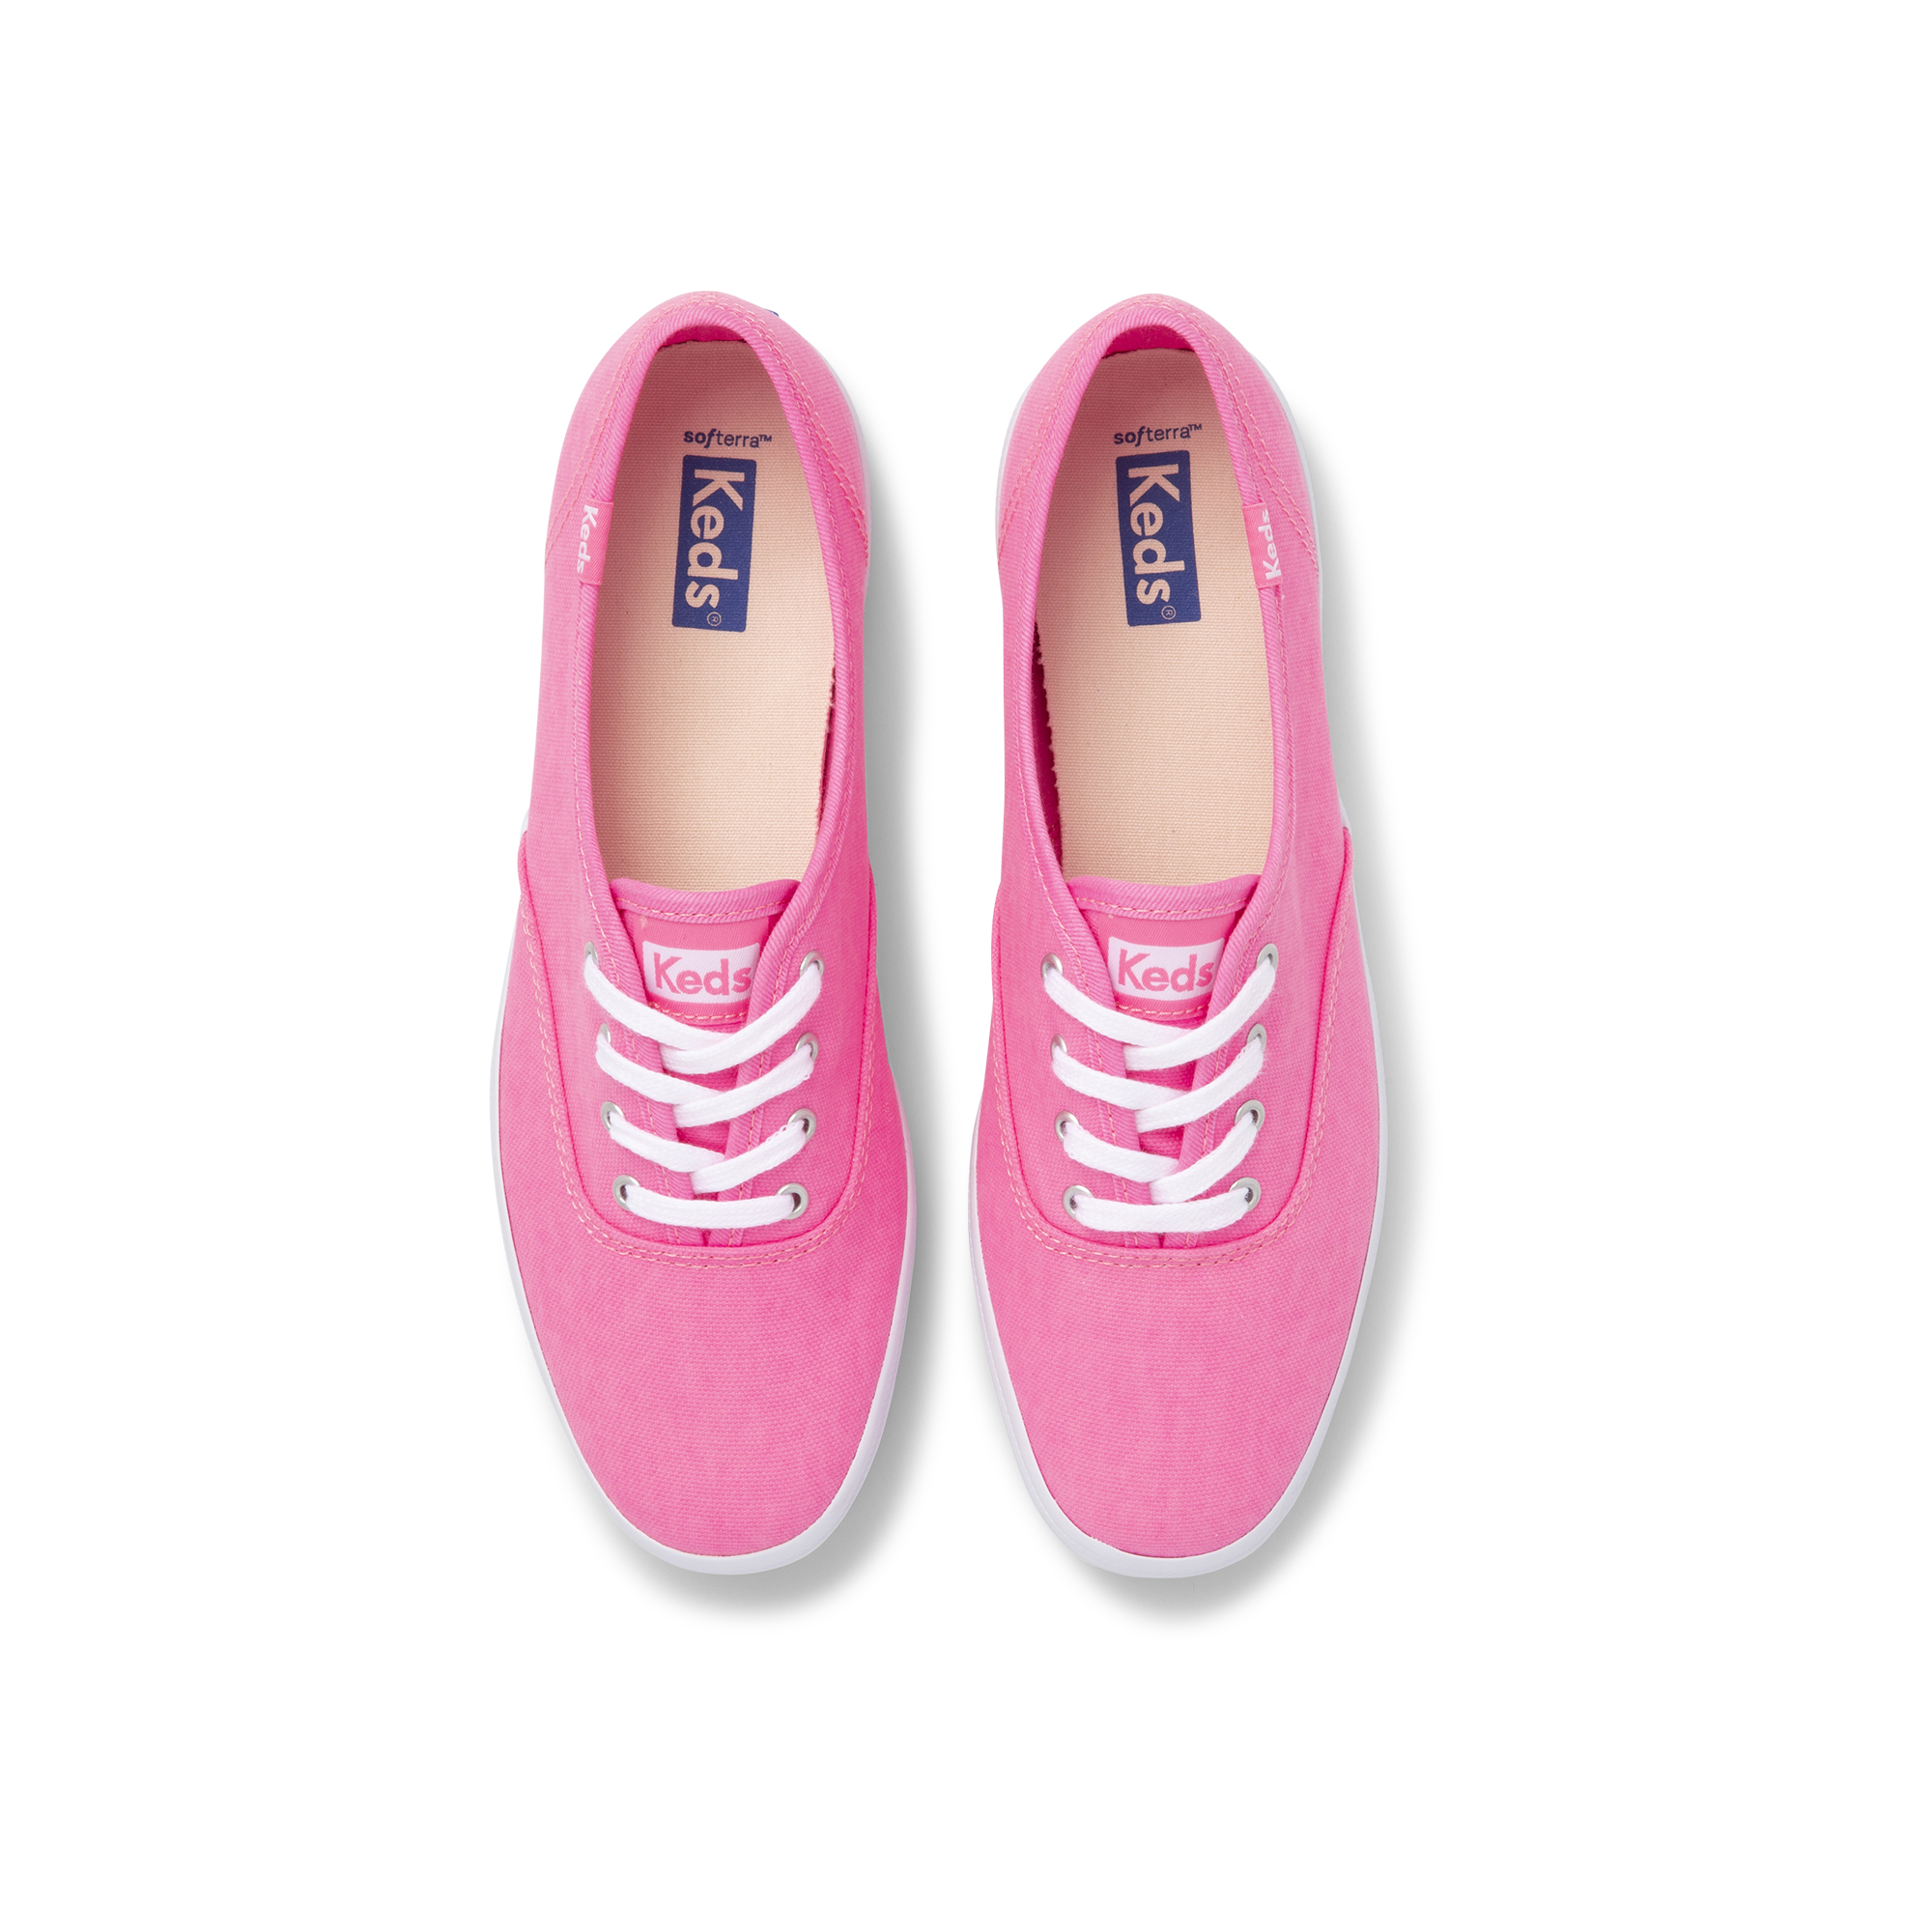 Giày Keds Nữ- Champion Seasonal Canvas Neon Pink- KD065874